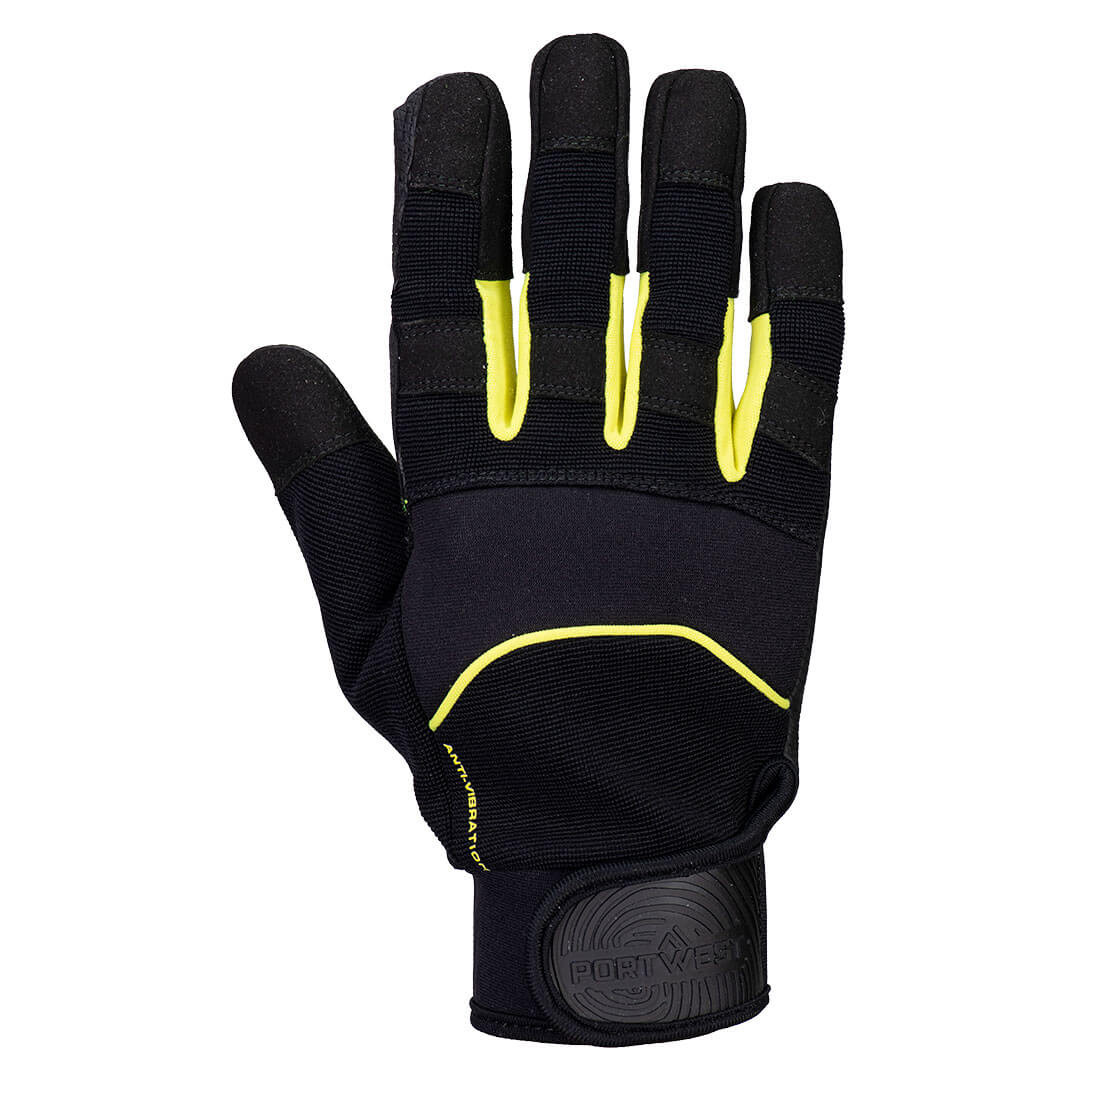 Mechanics Anti-Vibration Glove - Personal protection